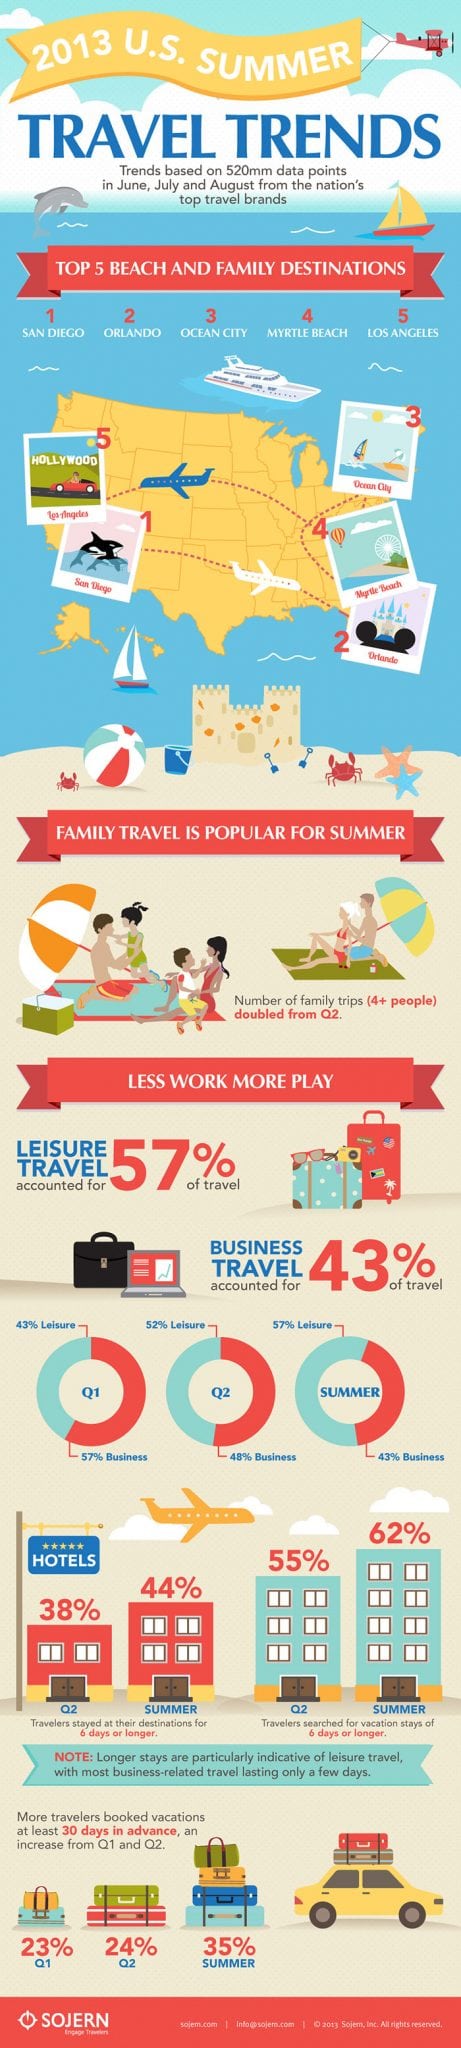 SummerTravelTrends_Infographic_Sojern_090513